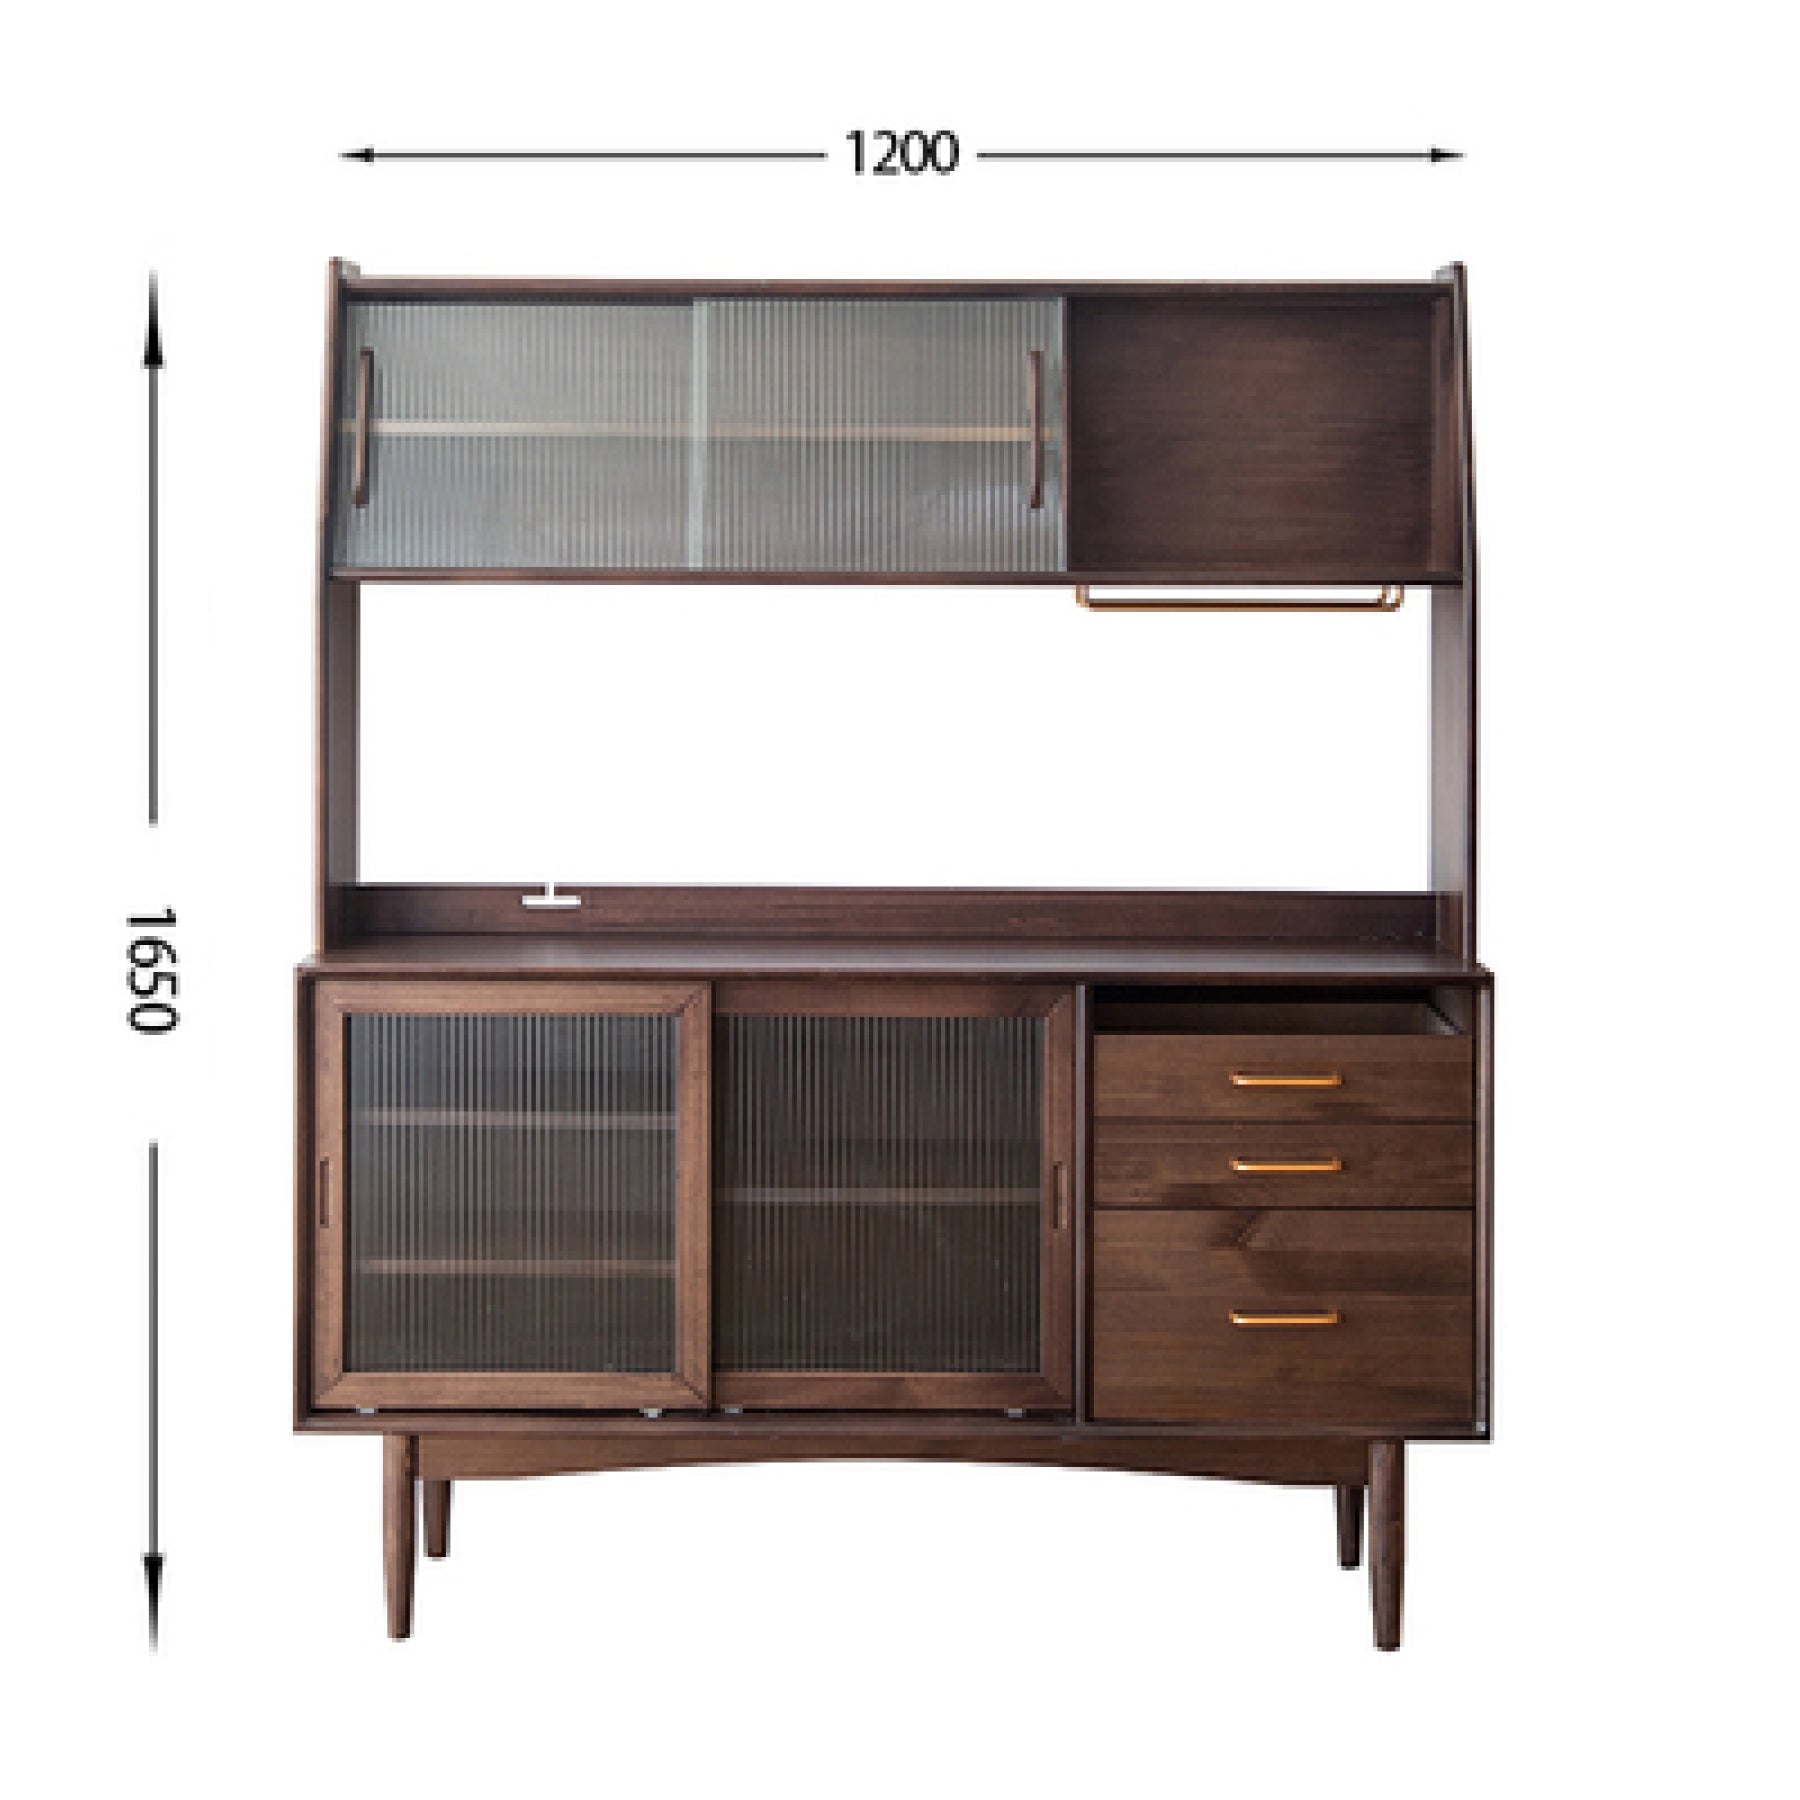 Tom Pine Wood Kitchen Storage Cabinet V